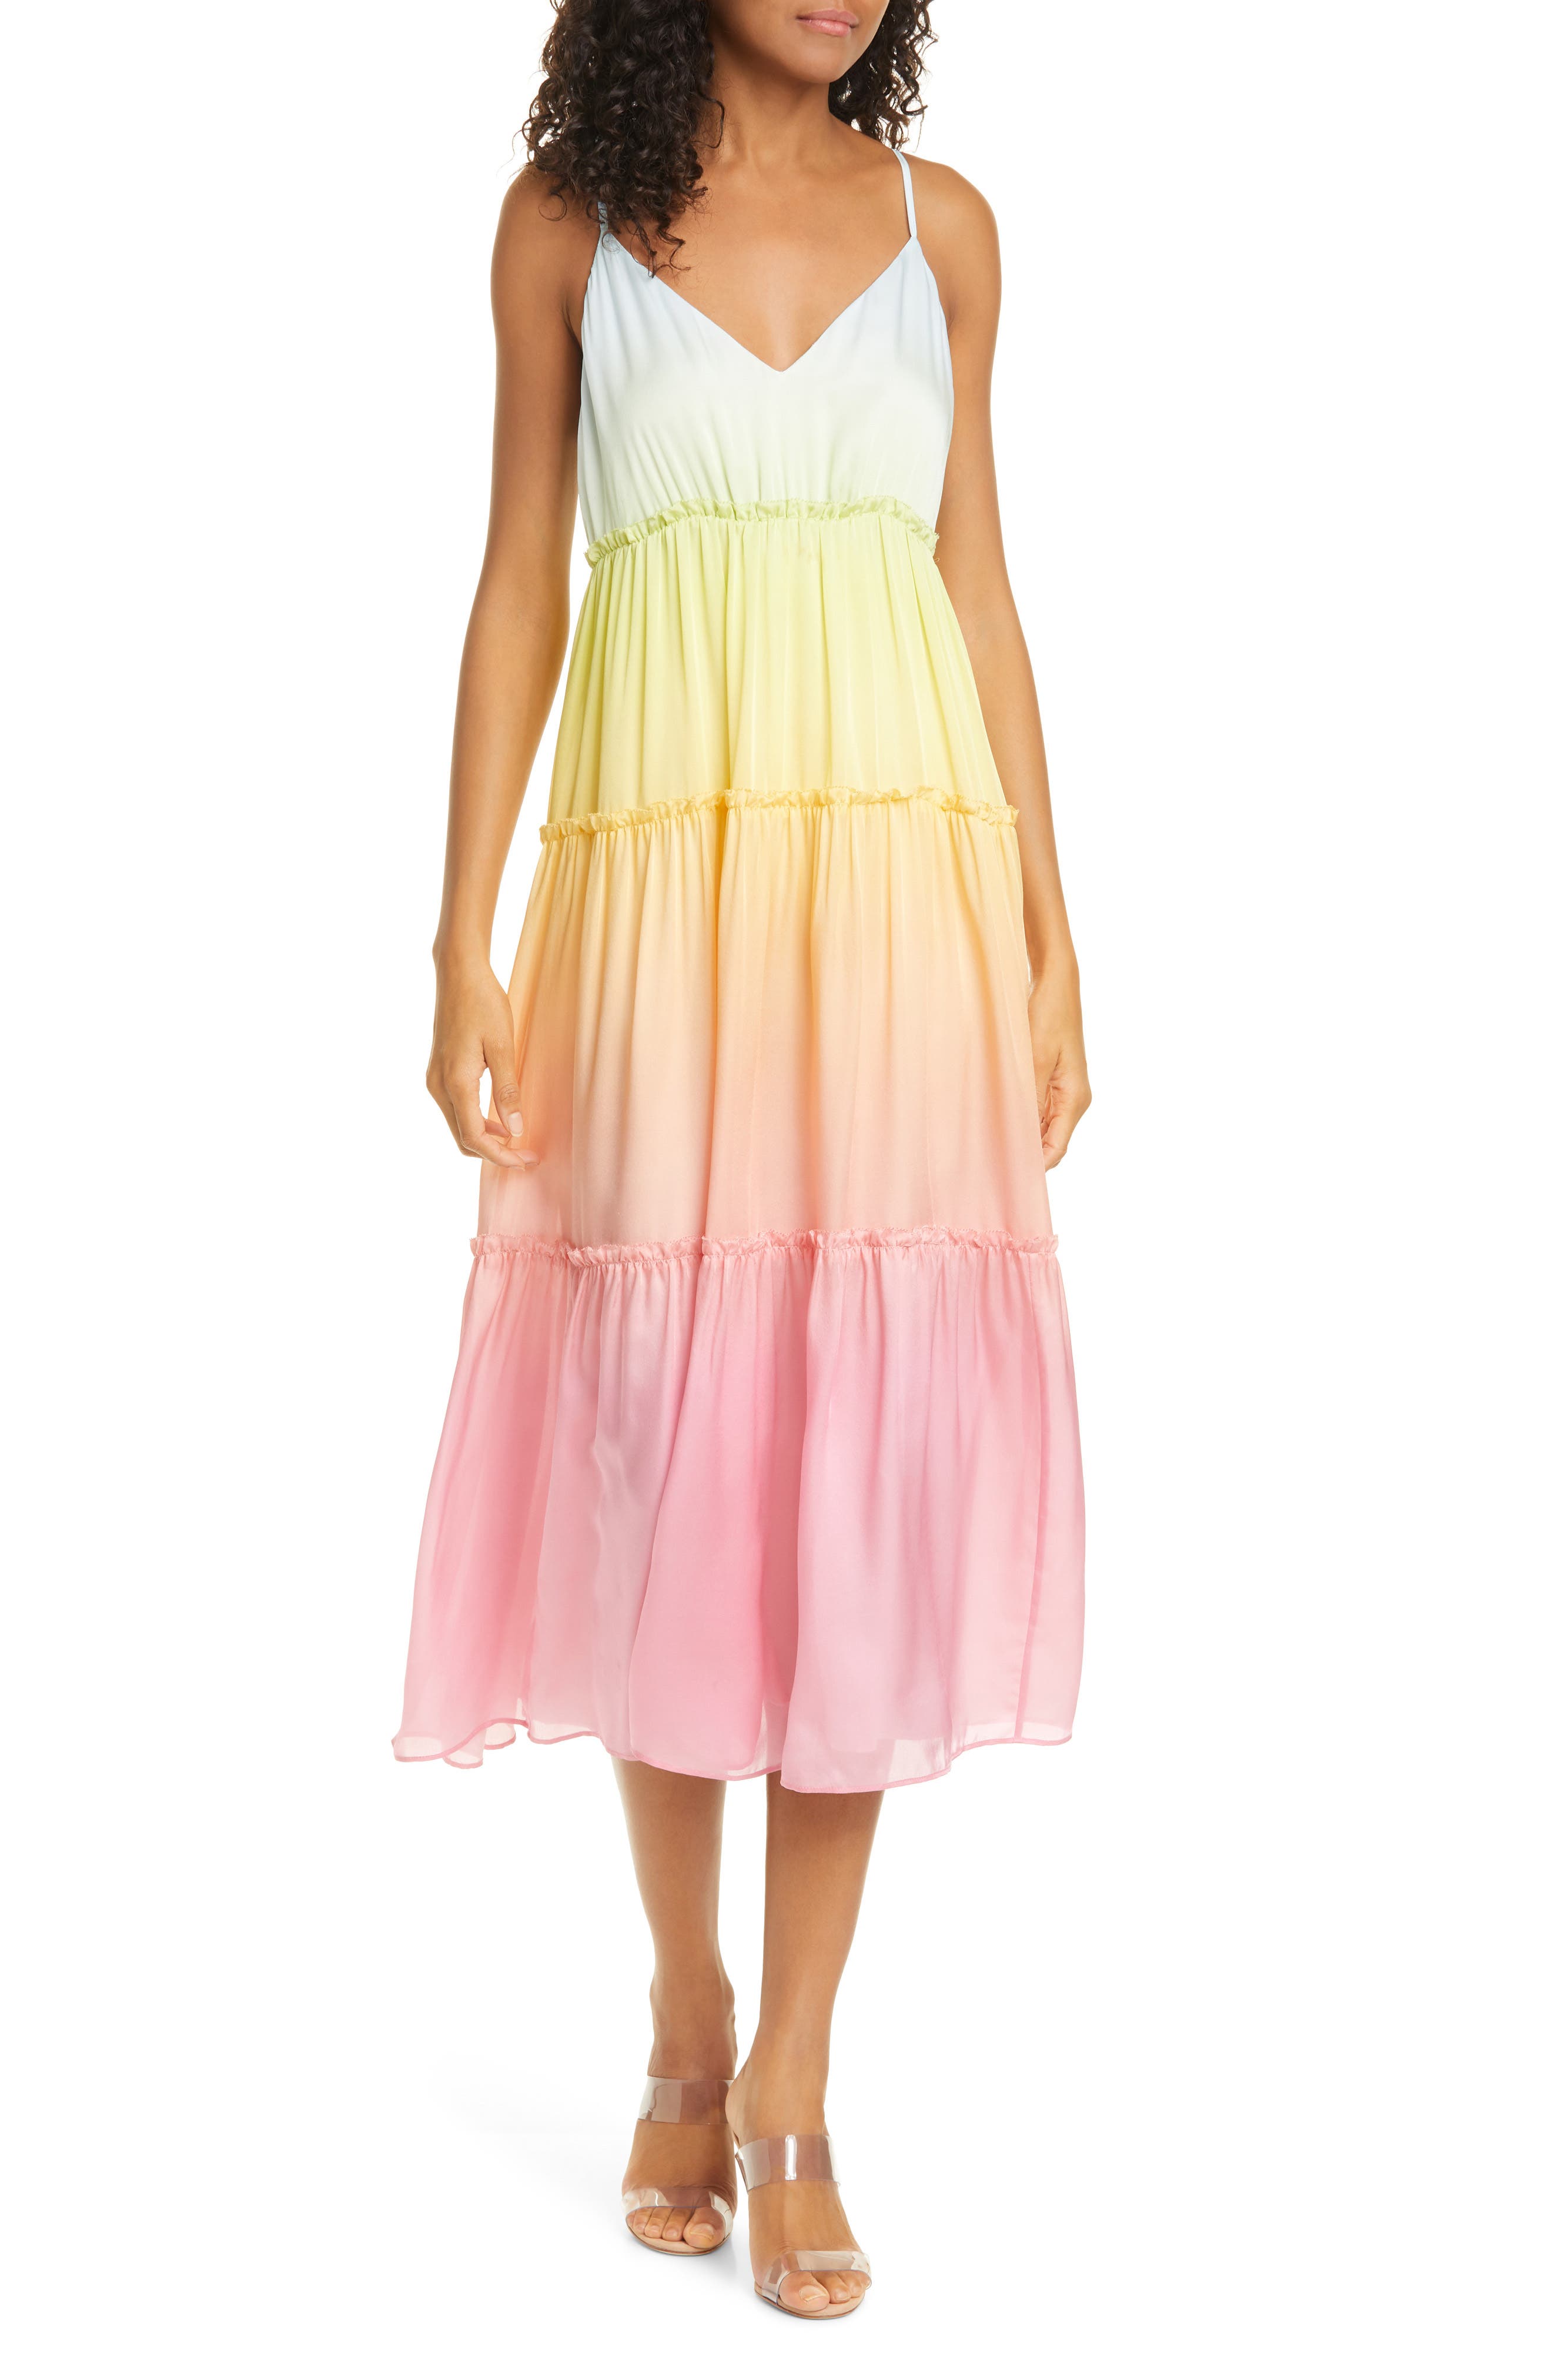 nordstrom rainbow dress